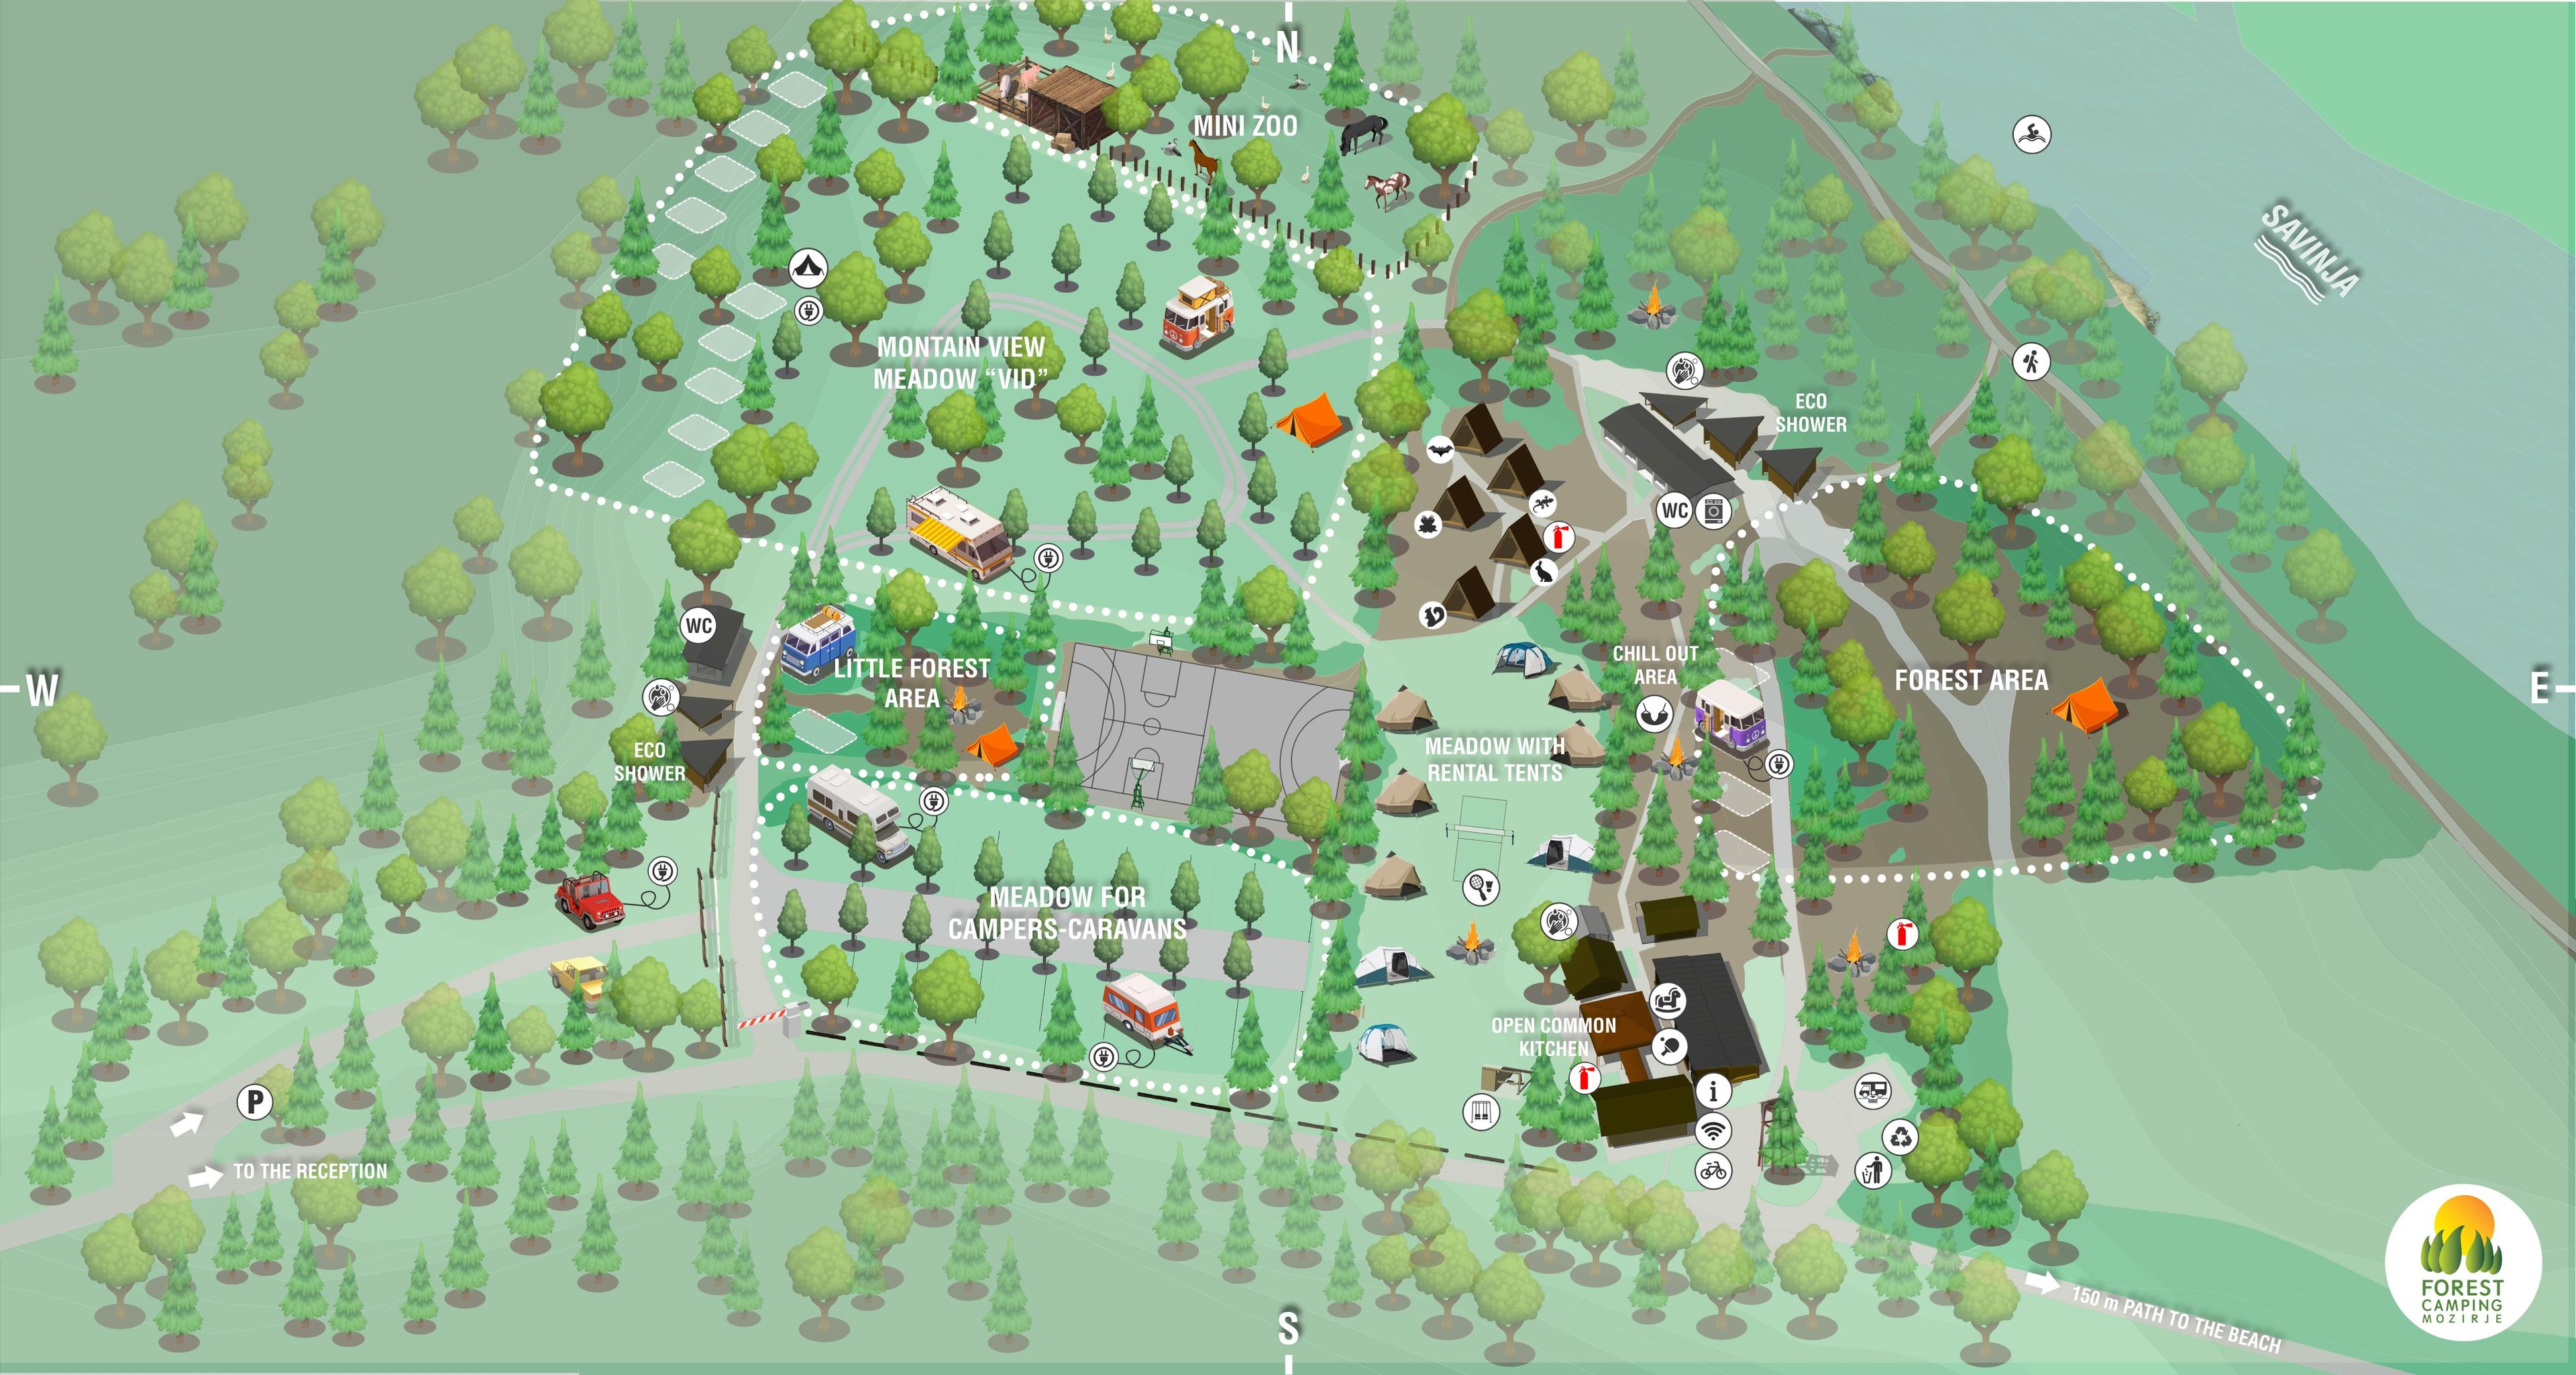 Camping map